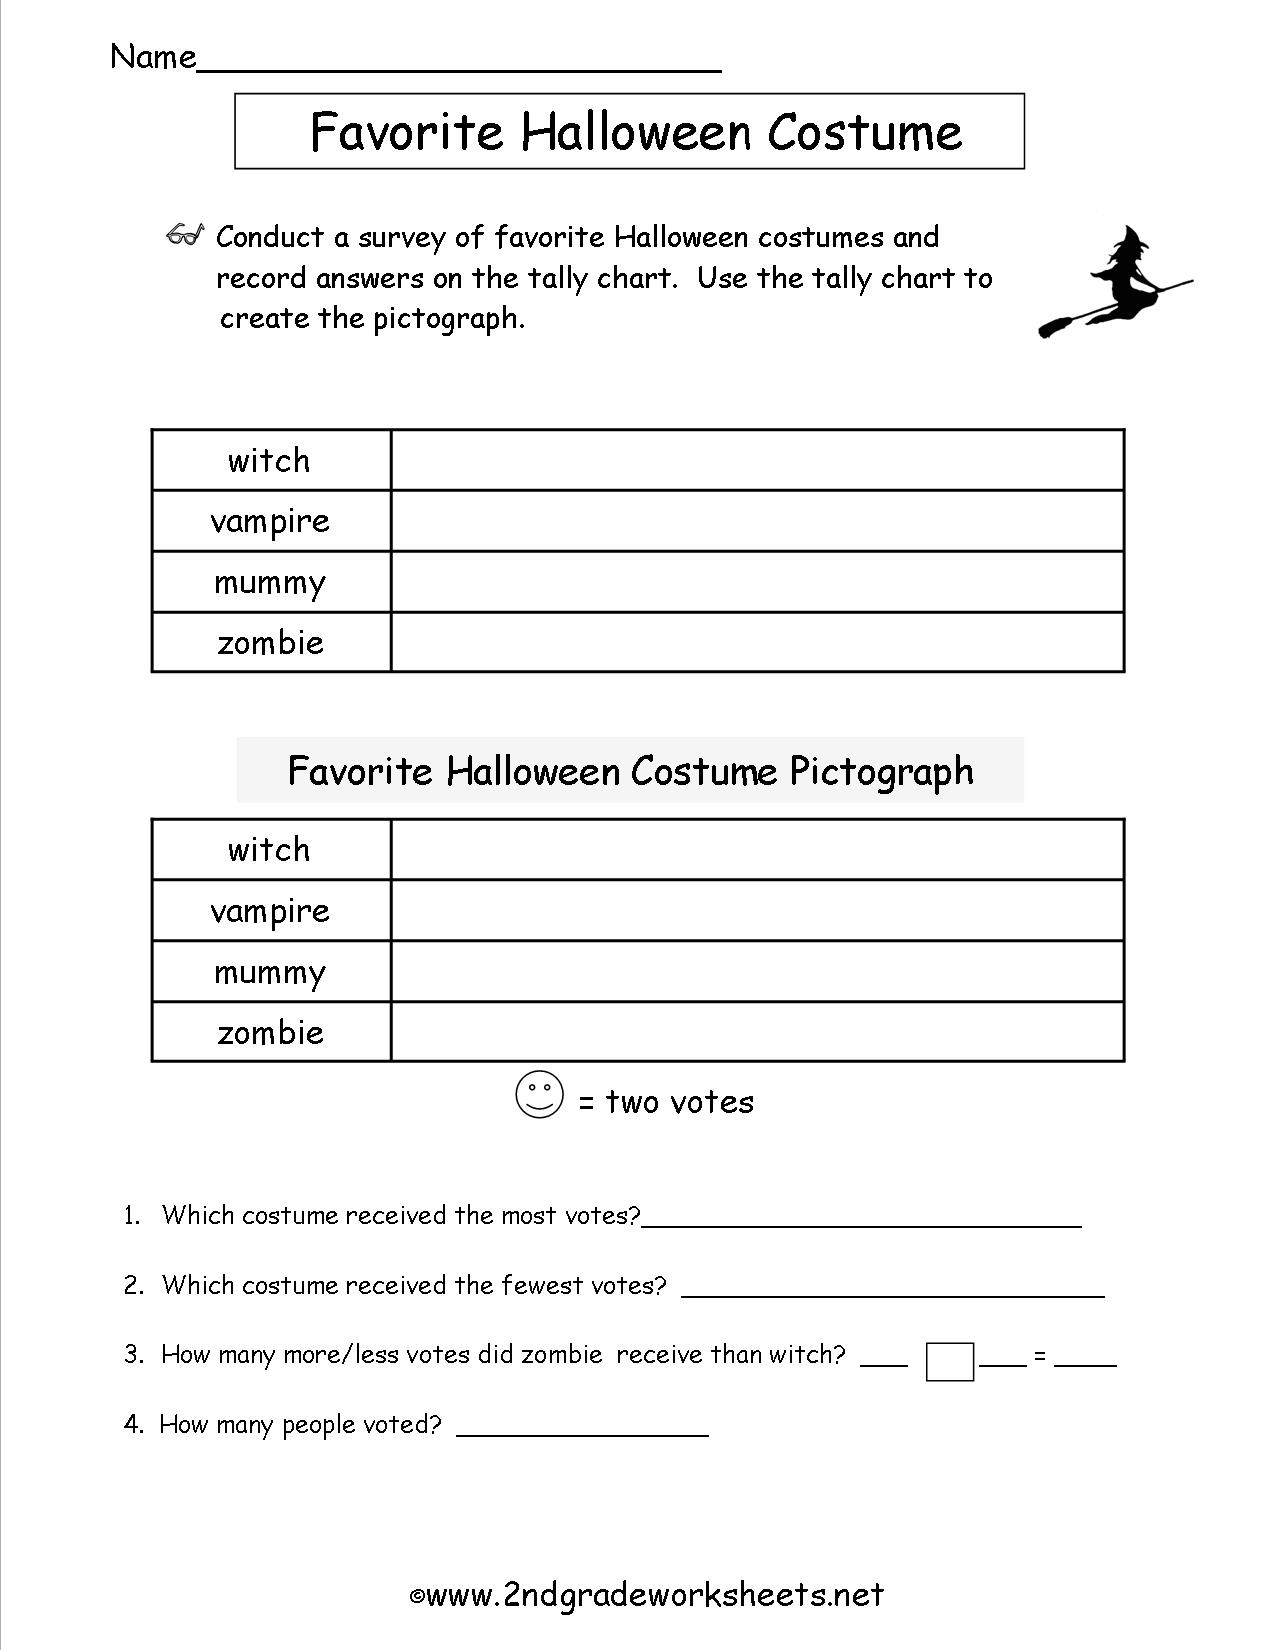 Halloween Pictograph Worksheet Image